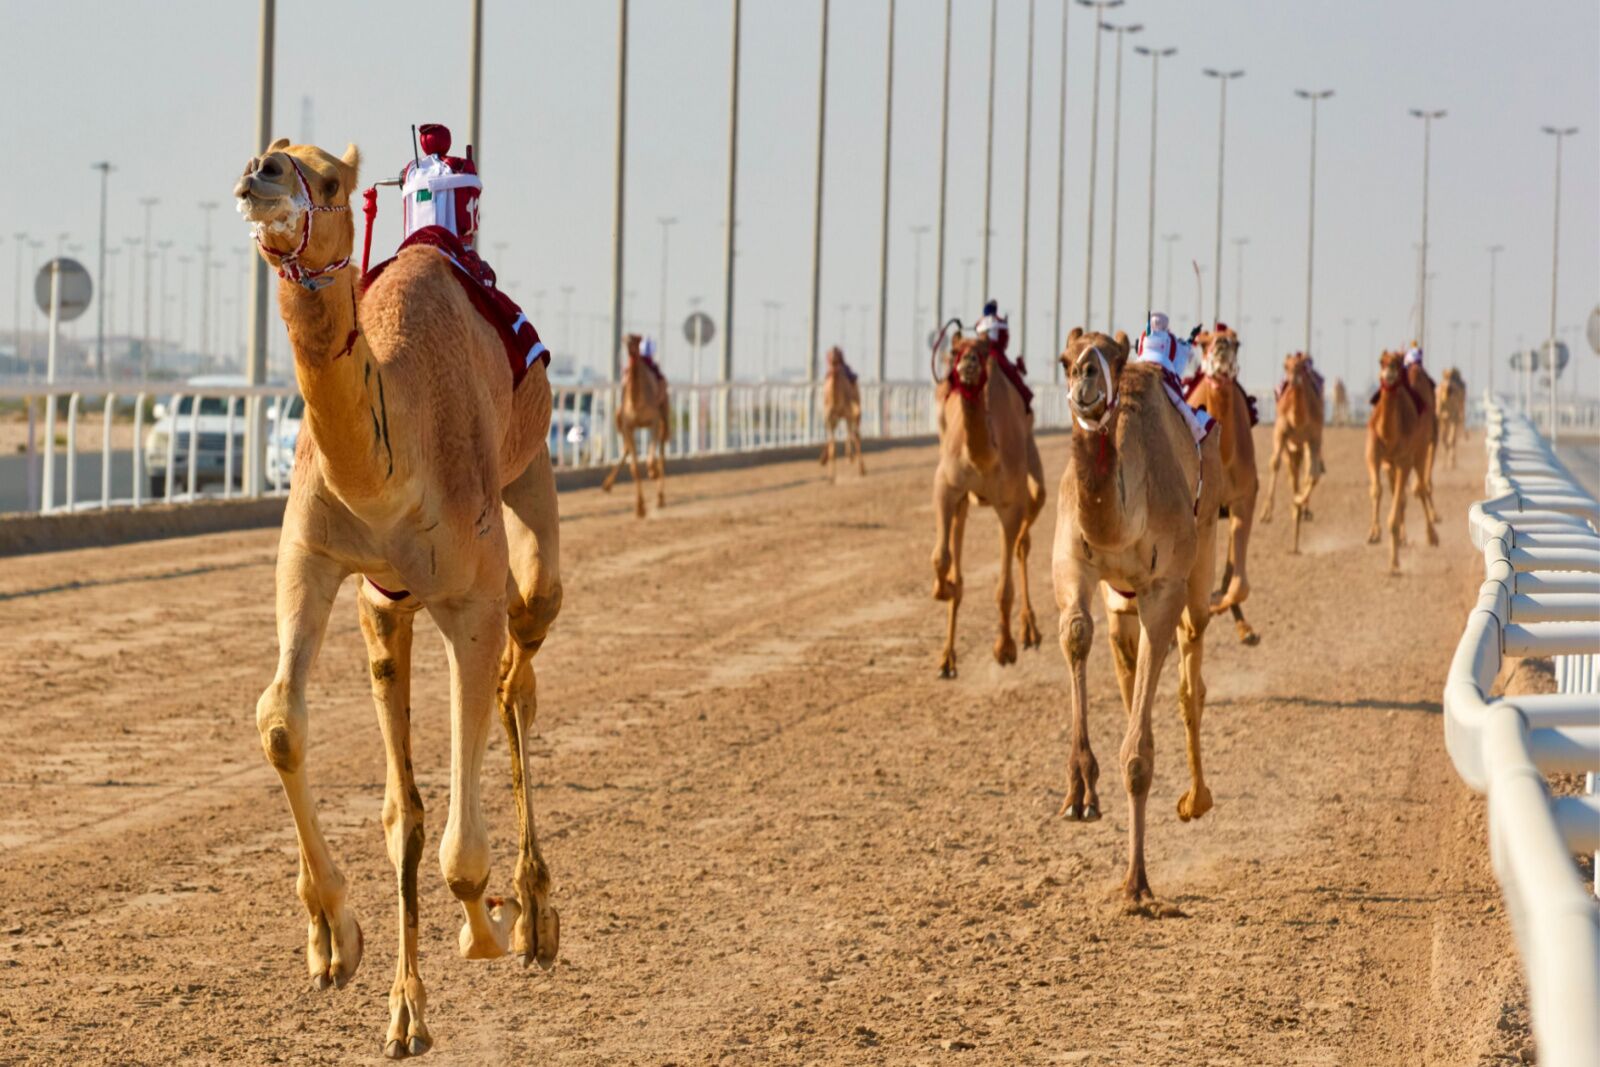 Camel race on dirt track